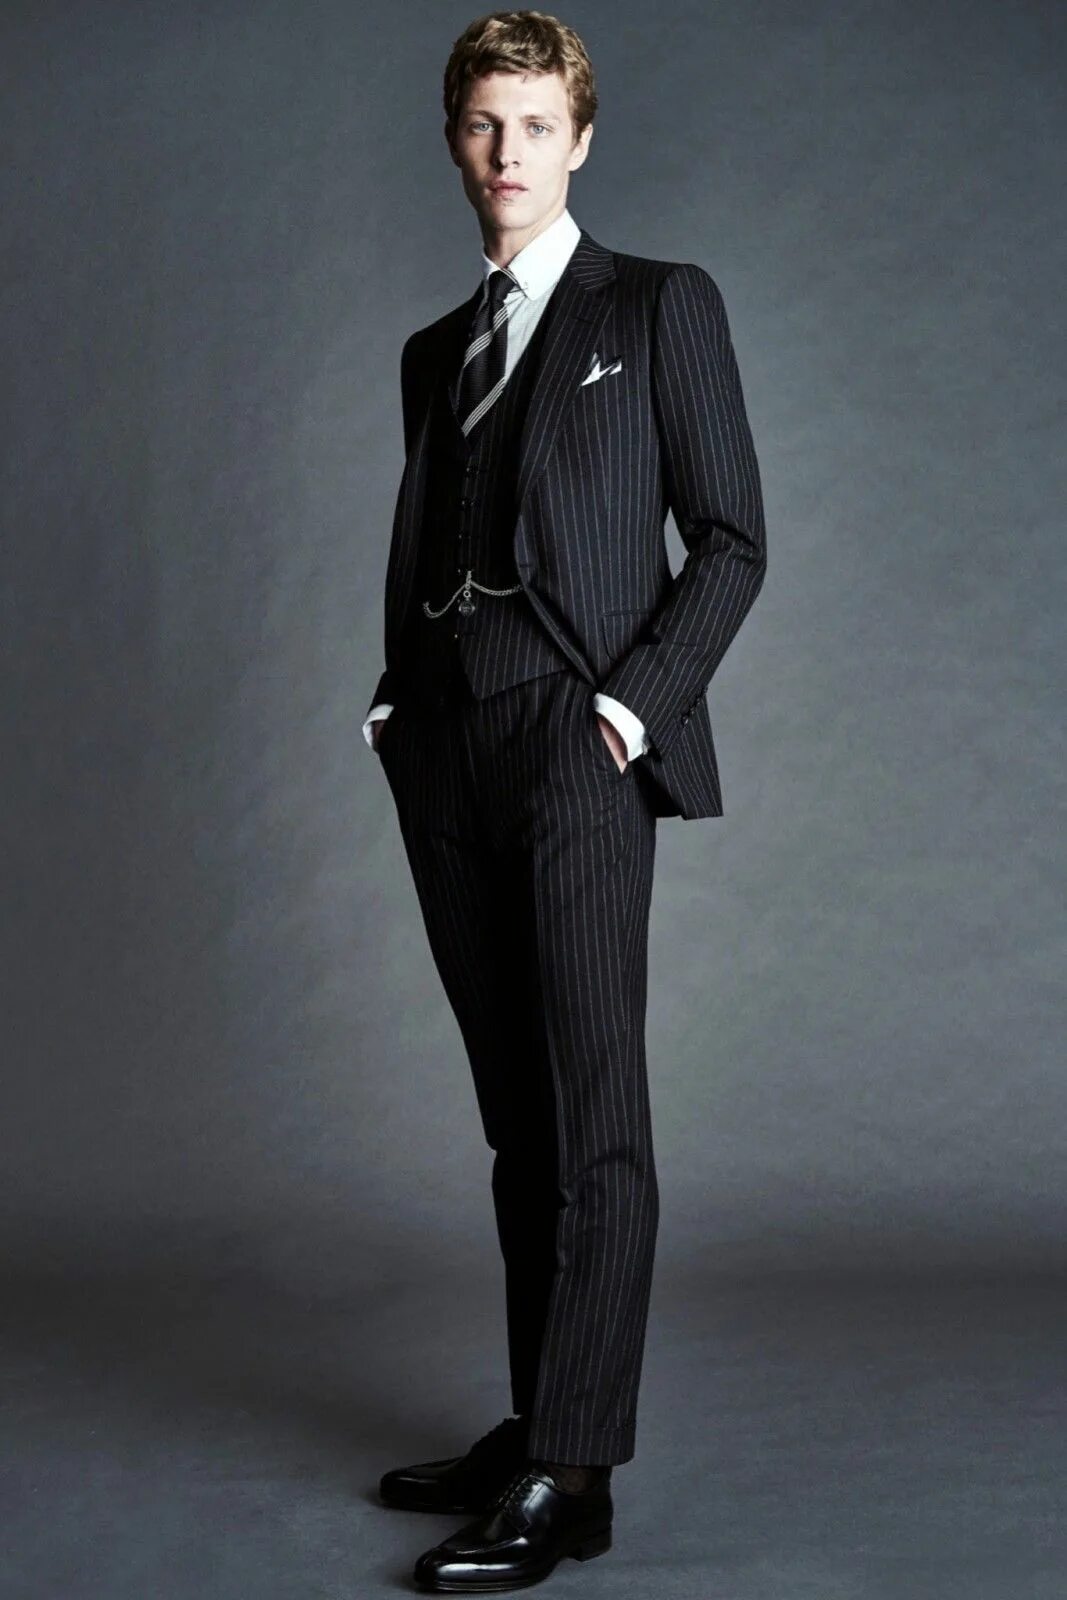 Tom Ford Suit. Том Форд 2016. Tom Ford man Suit. Молодой человек в костюме.